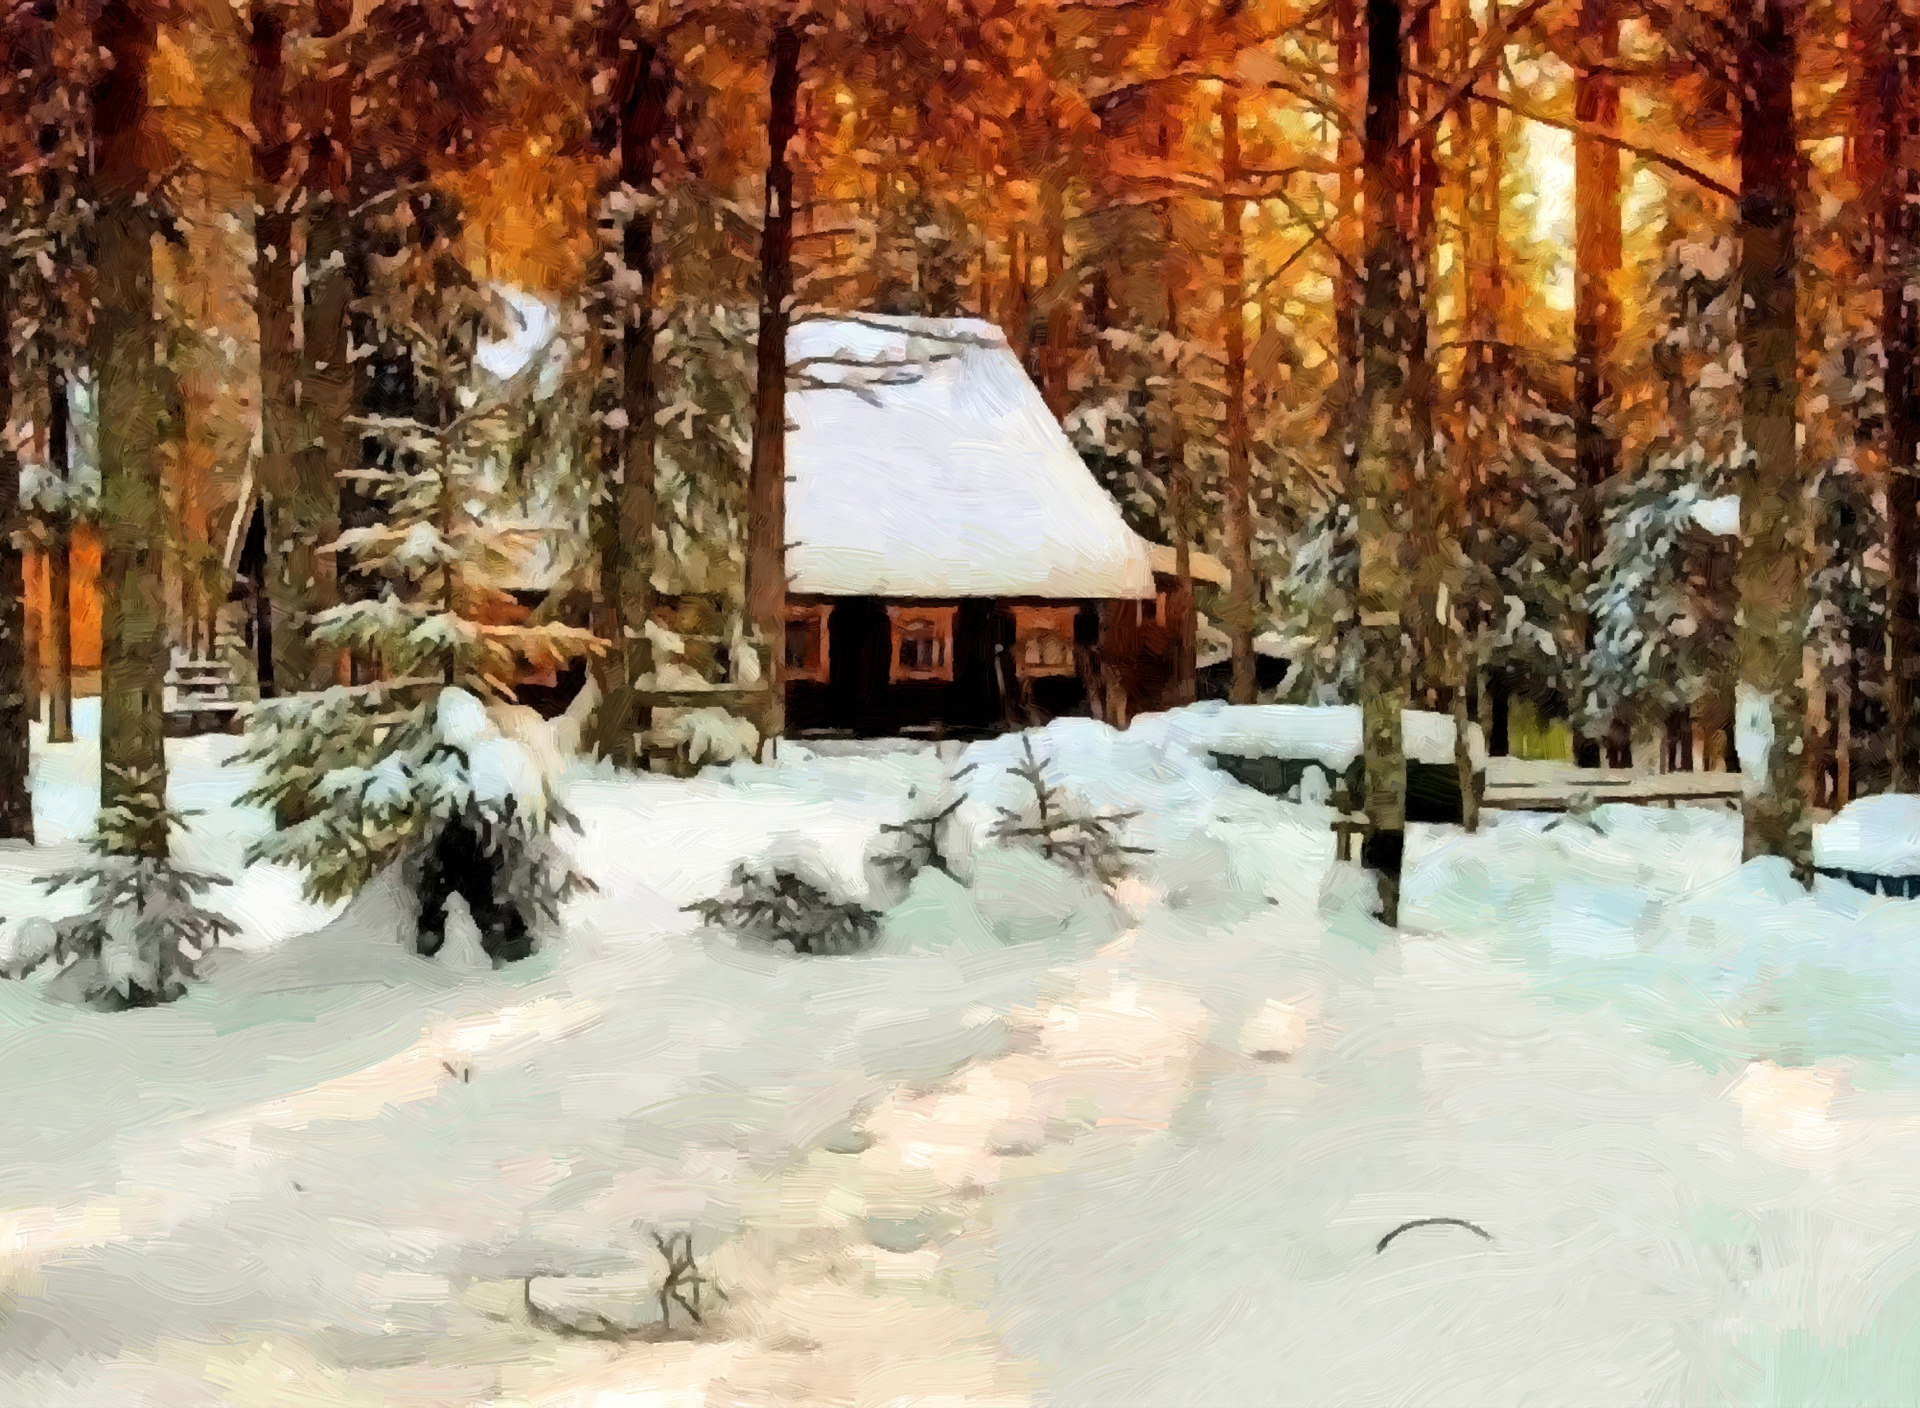 Домик в зимнем лесу. Зимний лес. Зимой в лесу. Заснеженный домик в лесу. Снегом укрыты дома